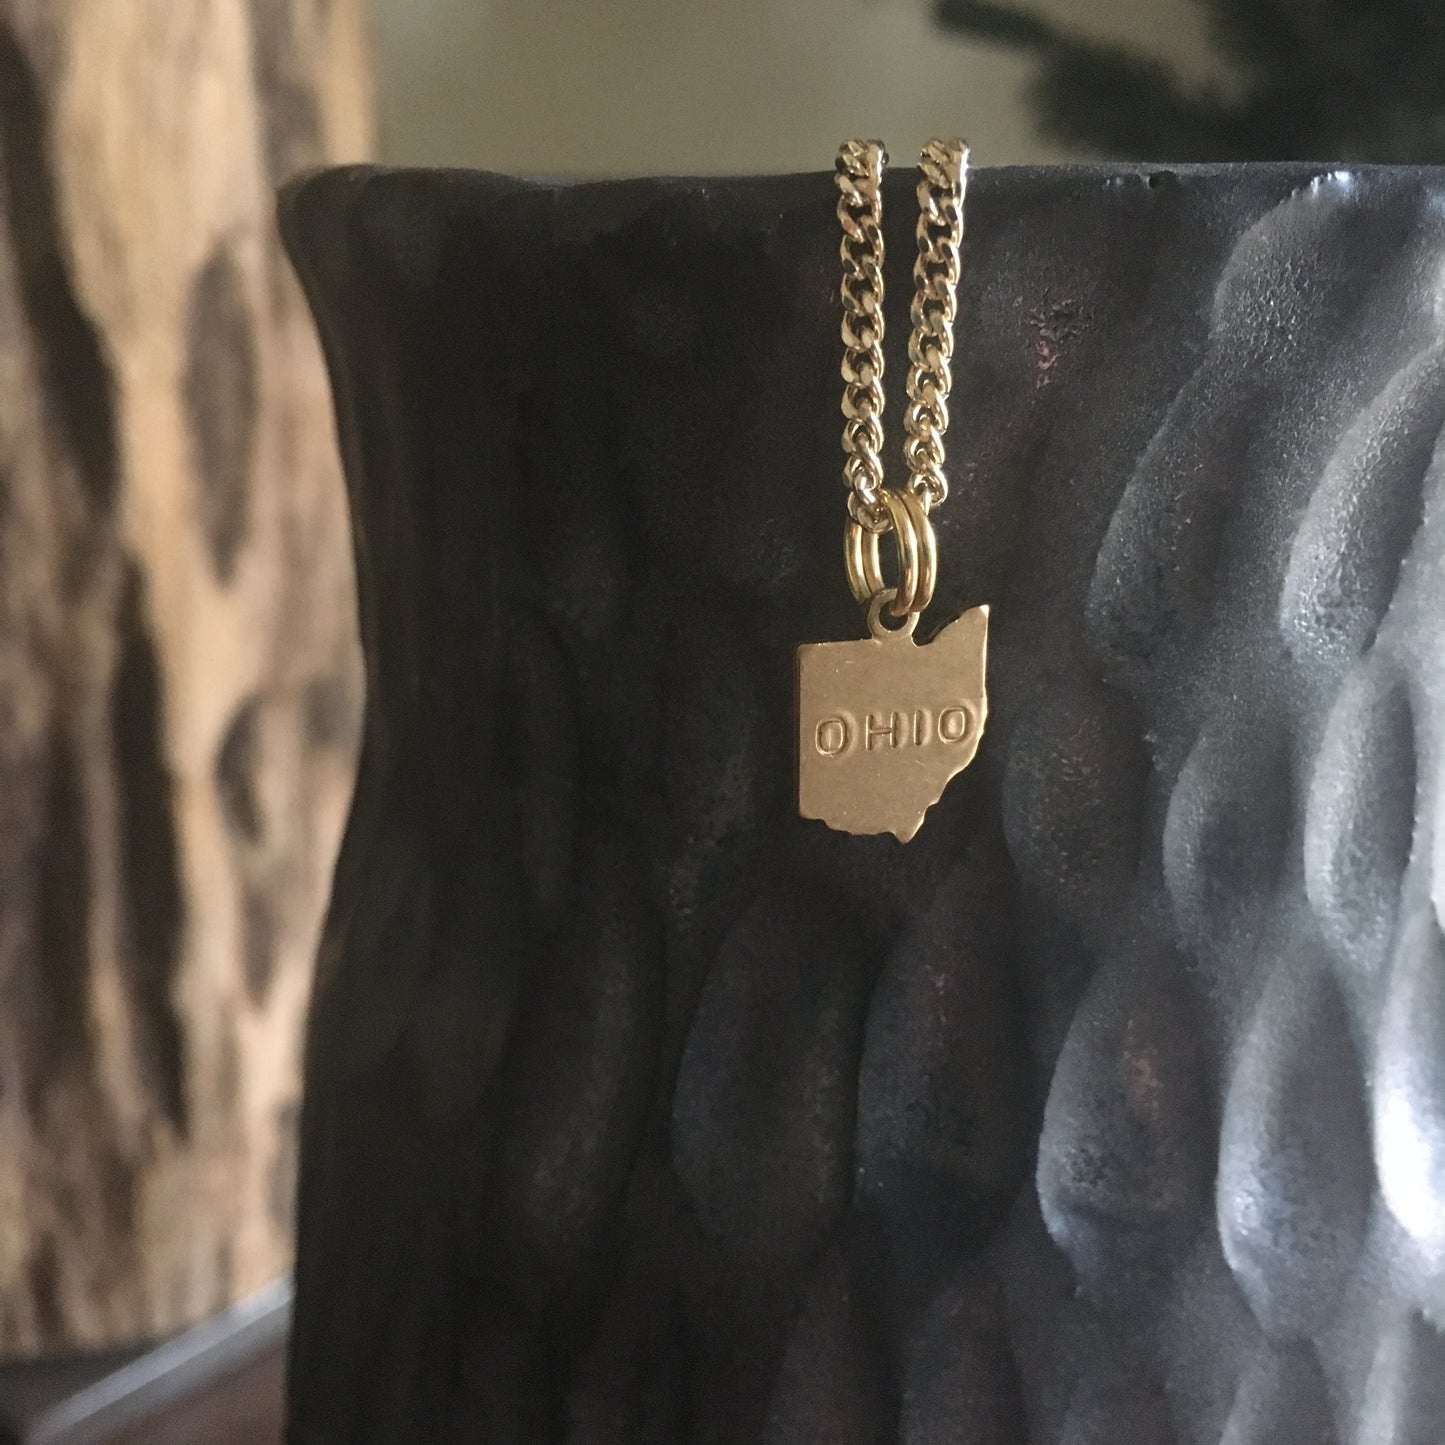 Gold Ohio Charm Necklace - OHIO stamped